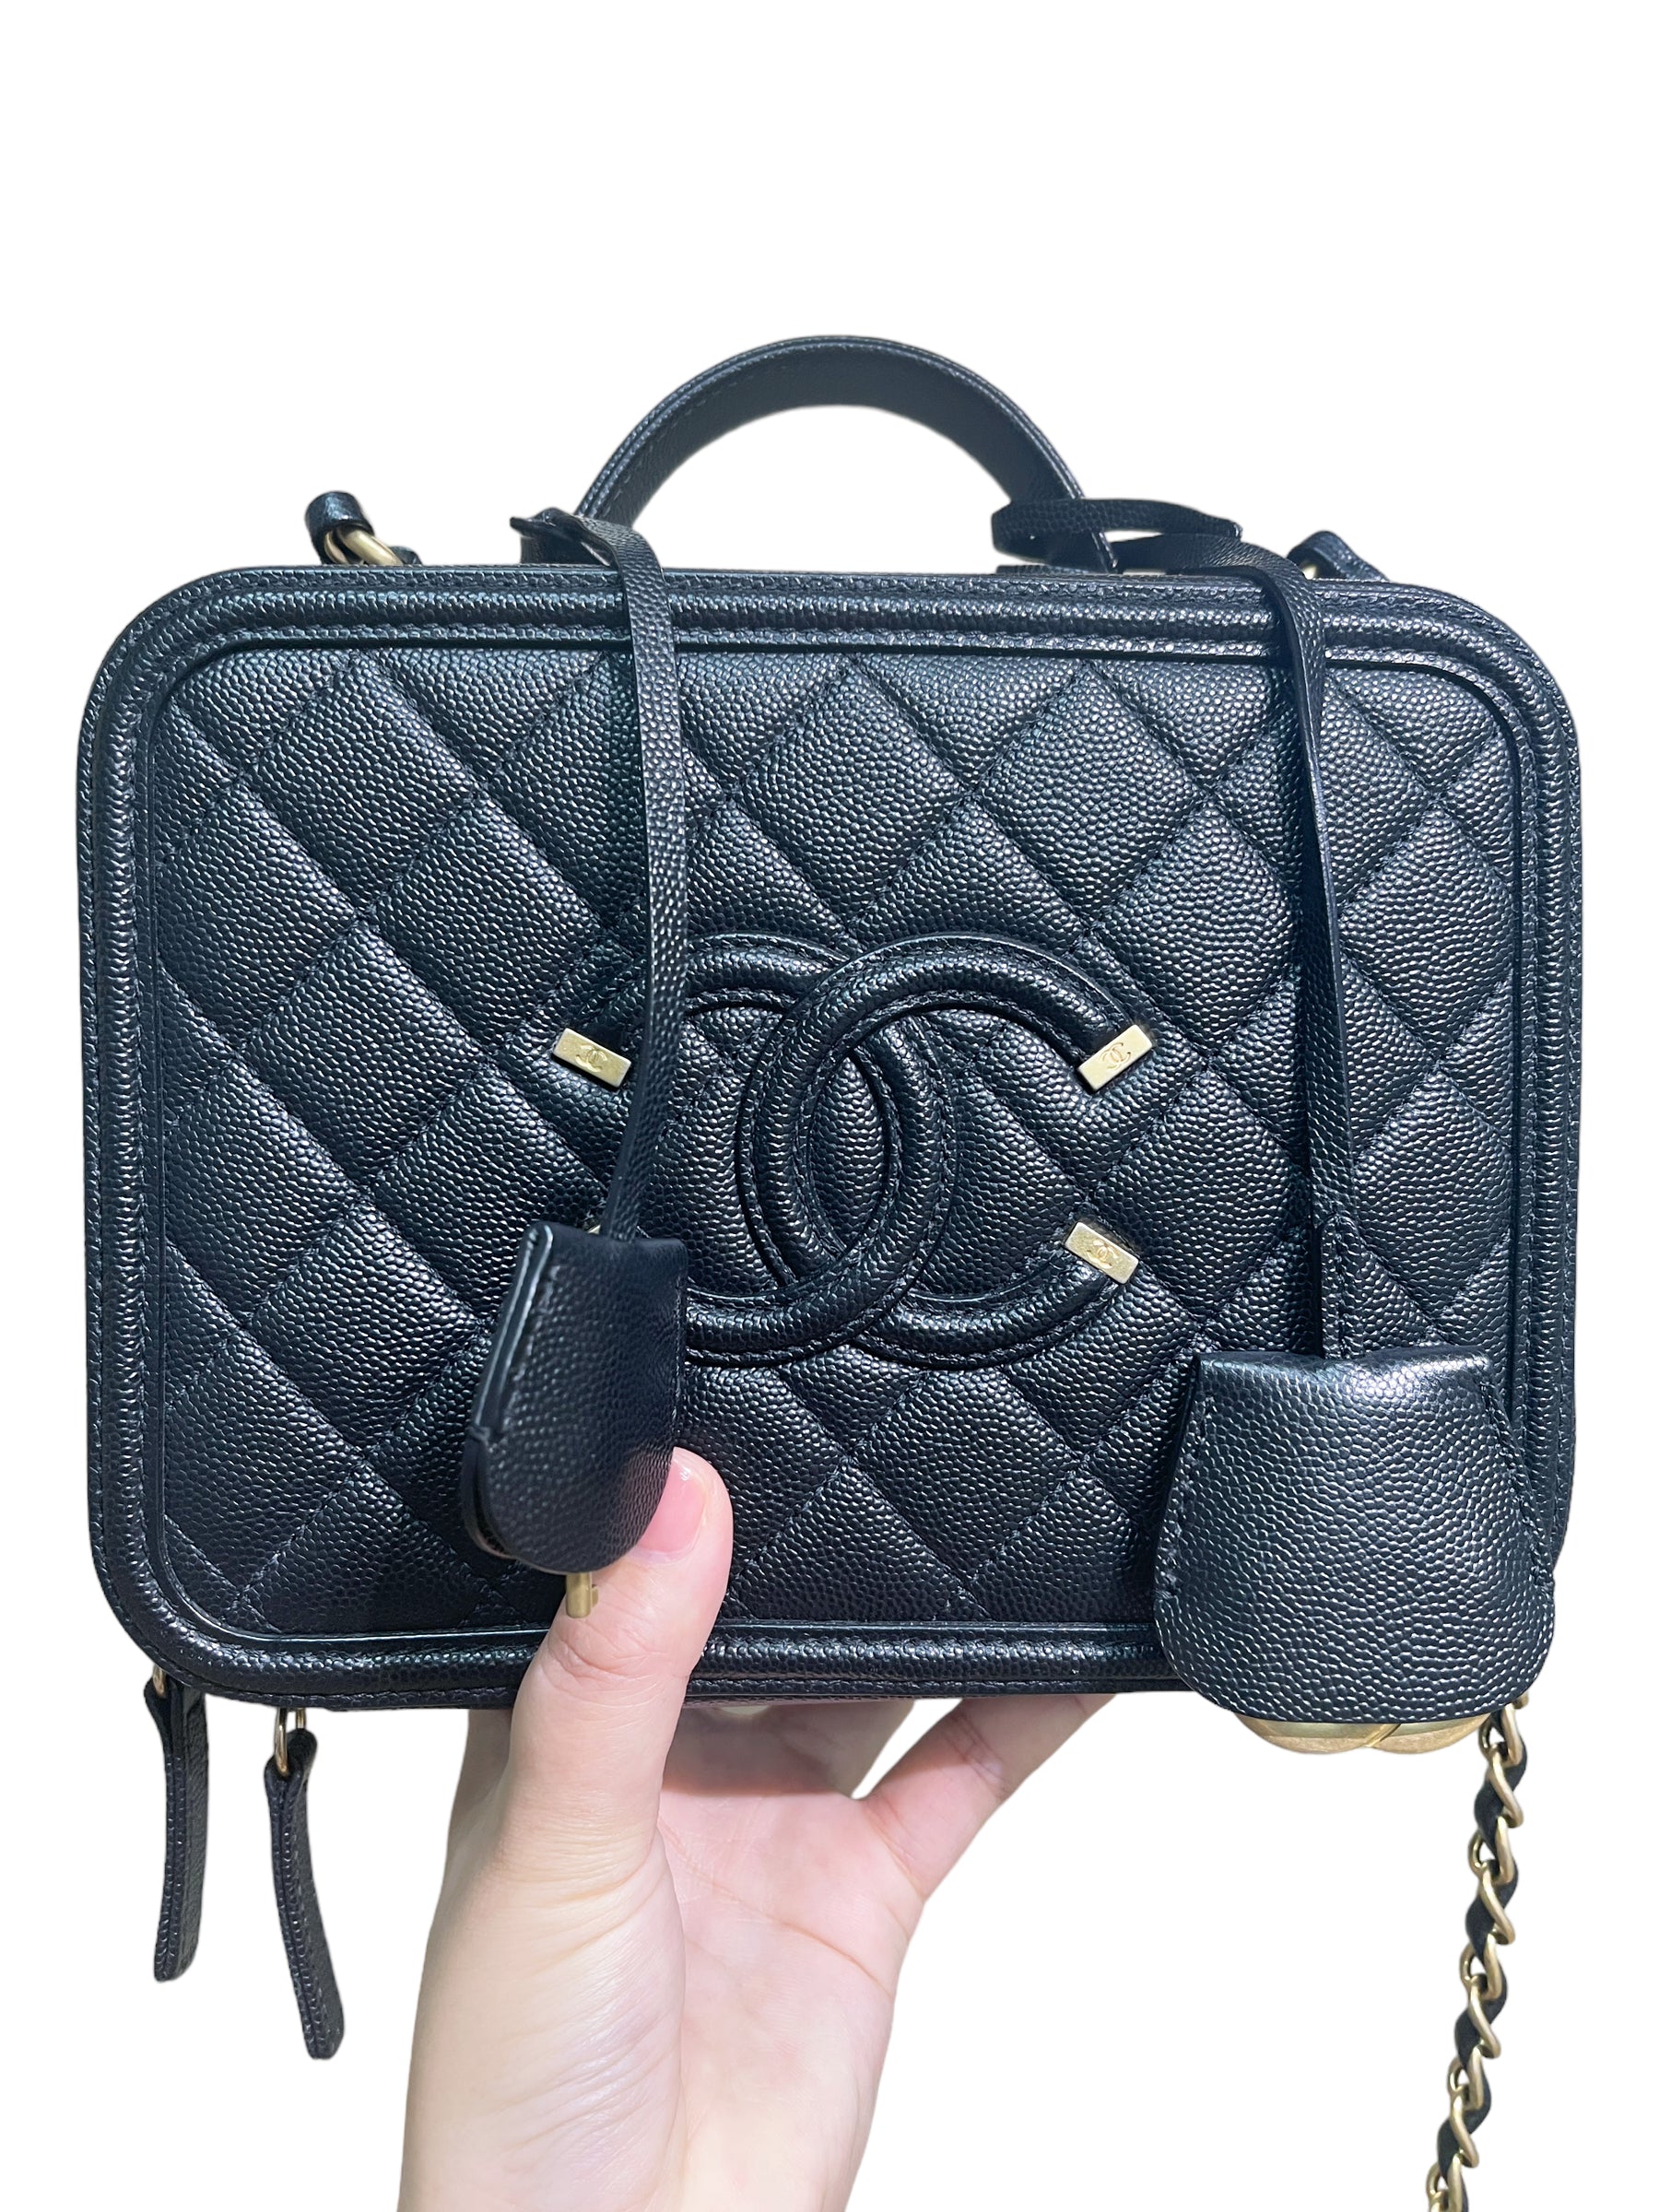 Chanel Black Vanity Case Medium Size GoldHardwere